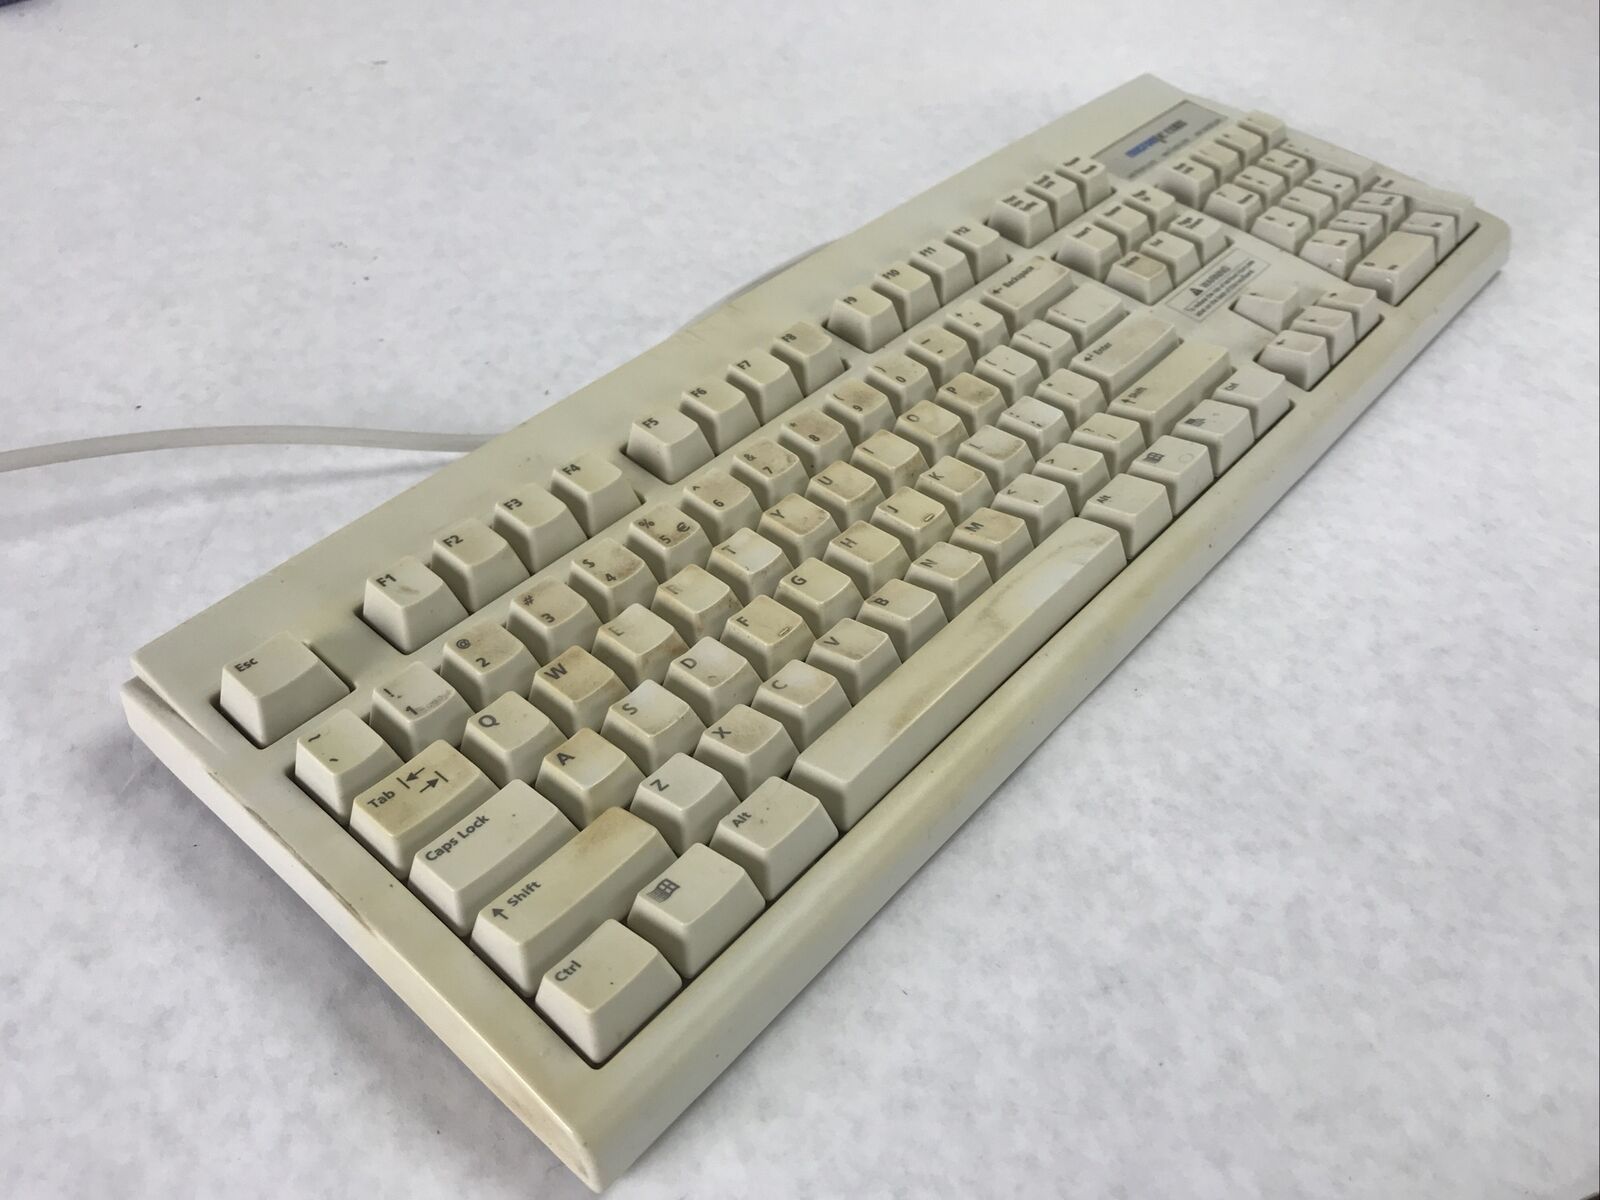 Micronpc.com Keyboard Model: 5121